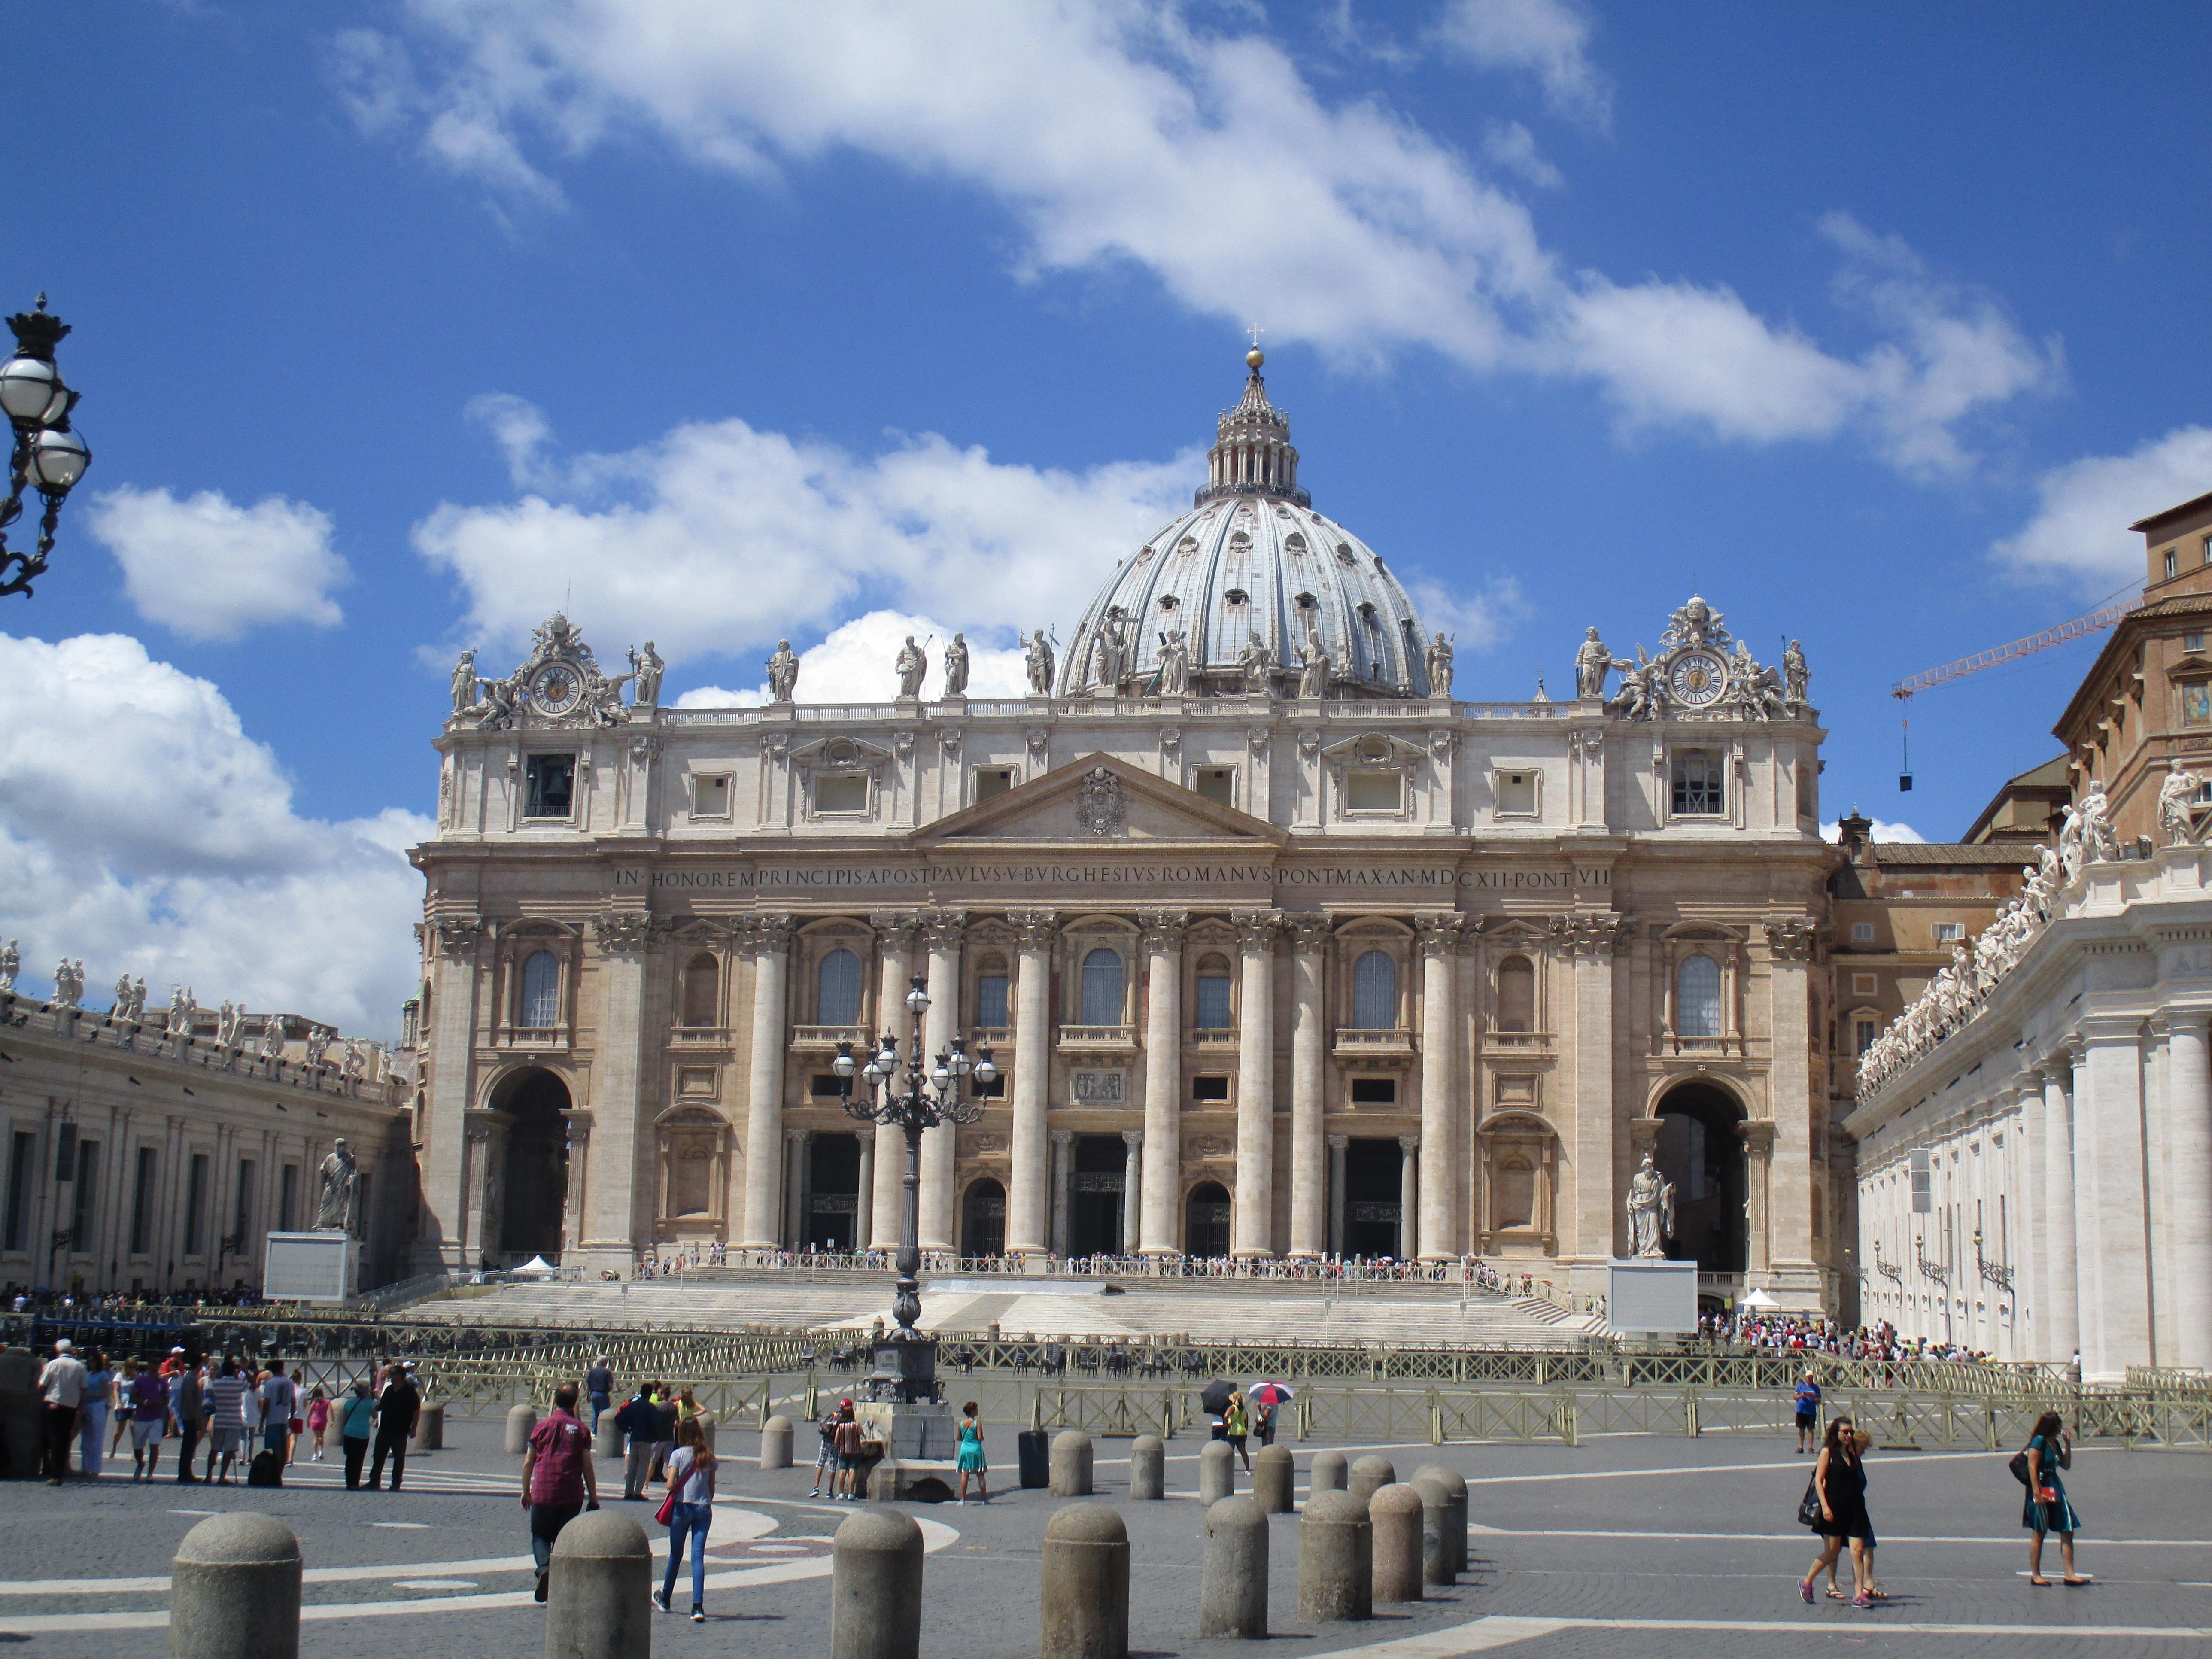 saint peter's basilica in vatican free image